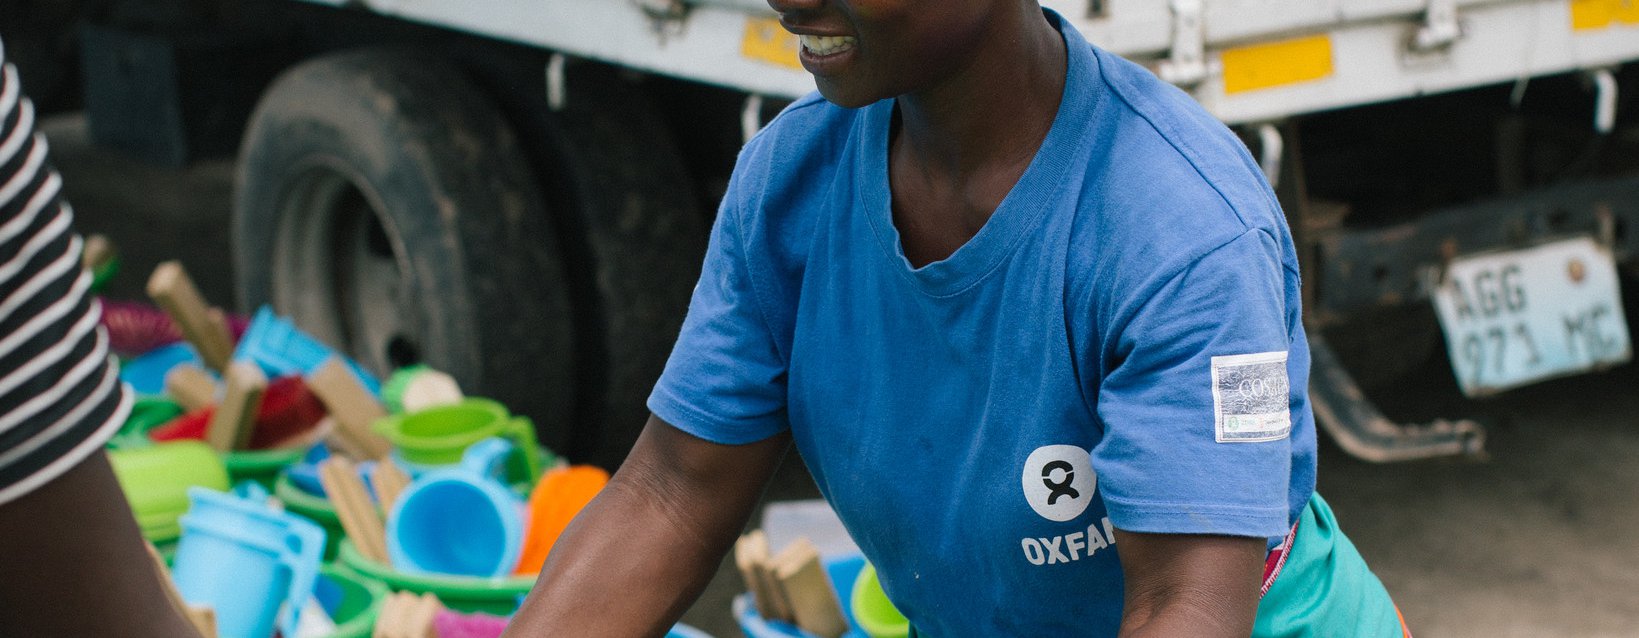 Elsa, 39 distributing Oxfam hygiene kits